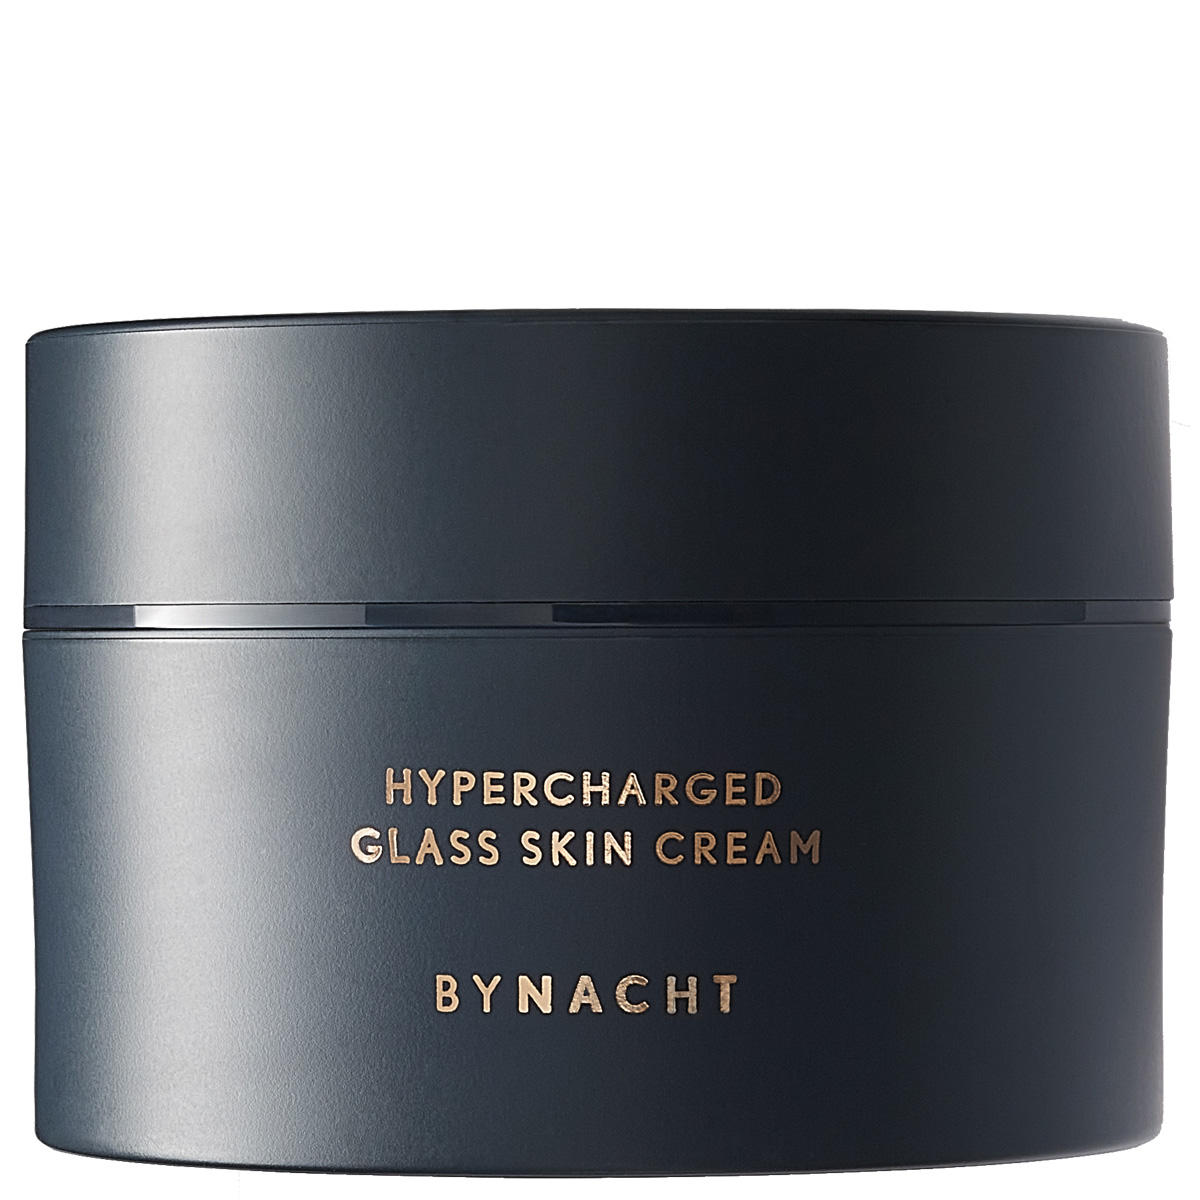 BYNACHT Hypercharged Glass Skin Cream 50 ml - 1